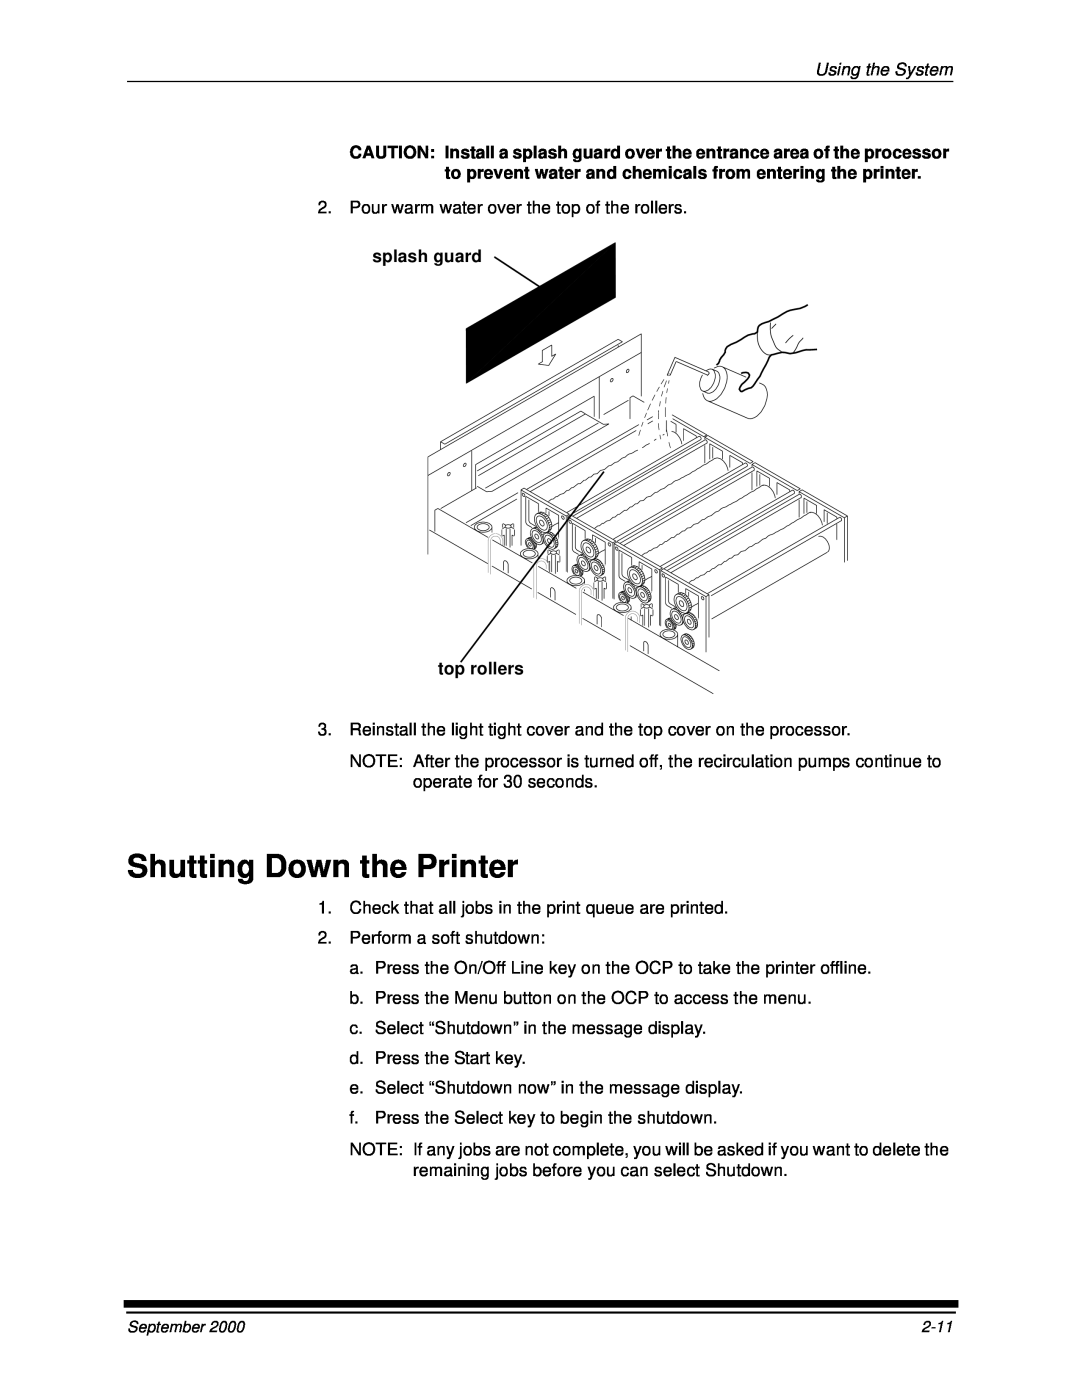 Kodak 20P manual Shutting Down the Printer, Using the System, splash guard top rollers 